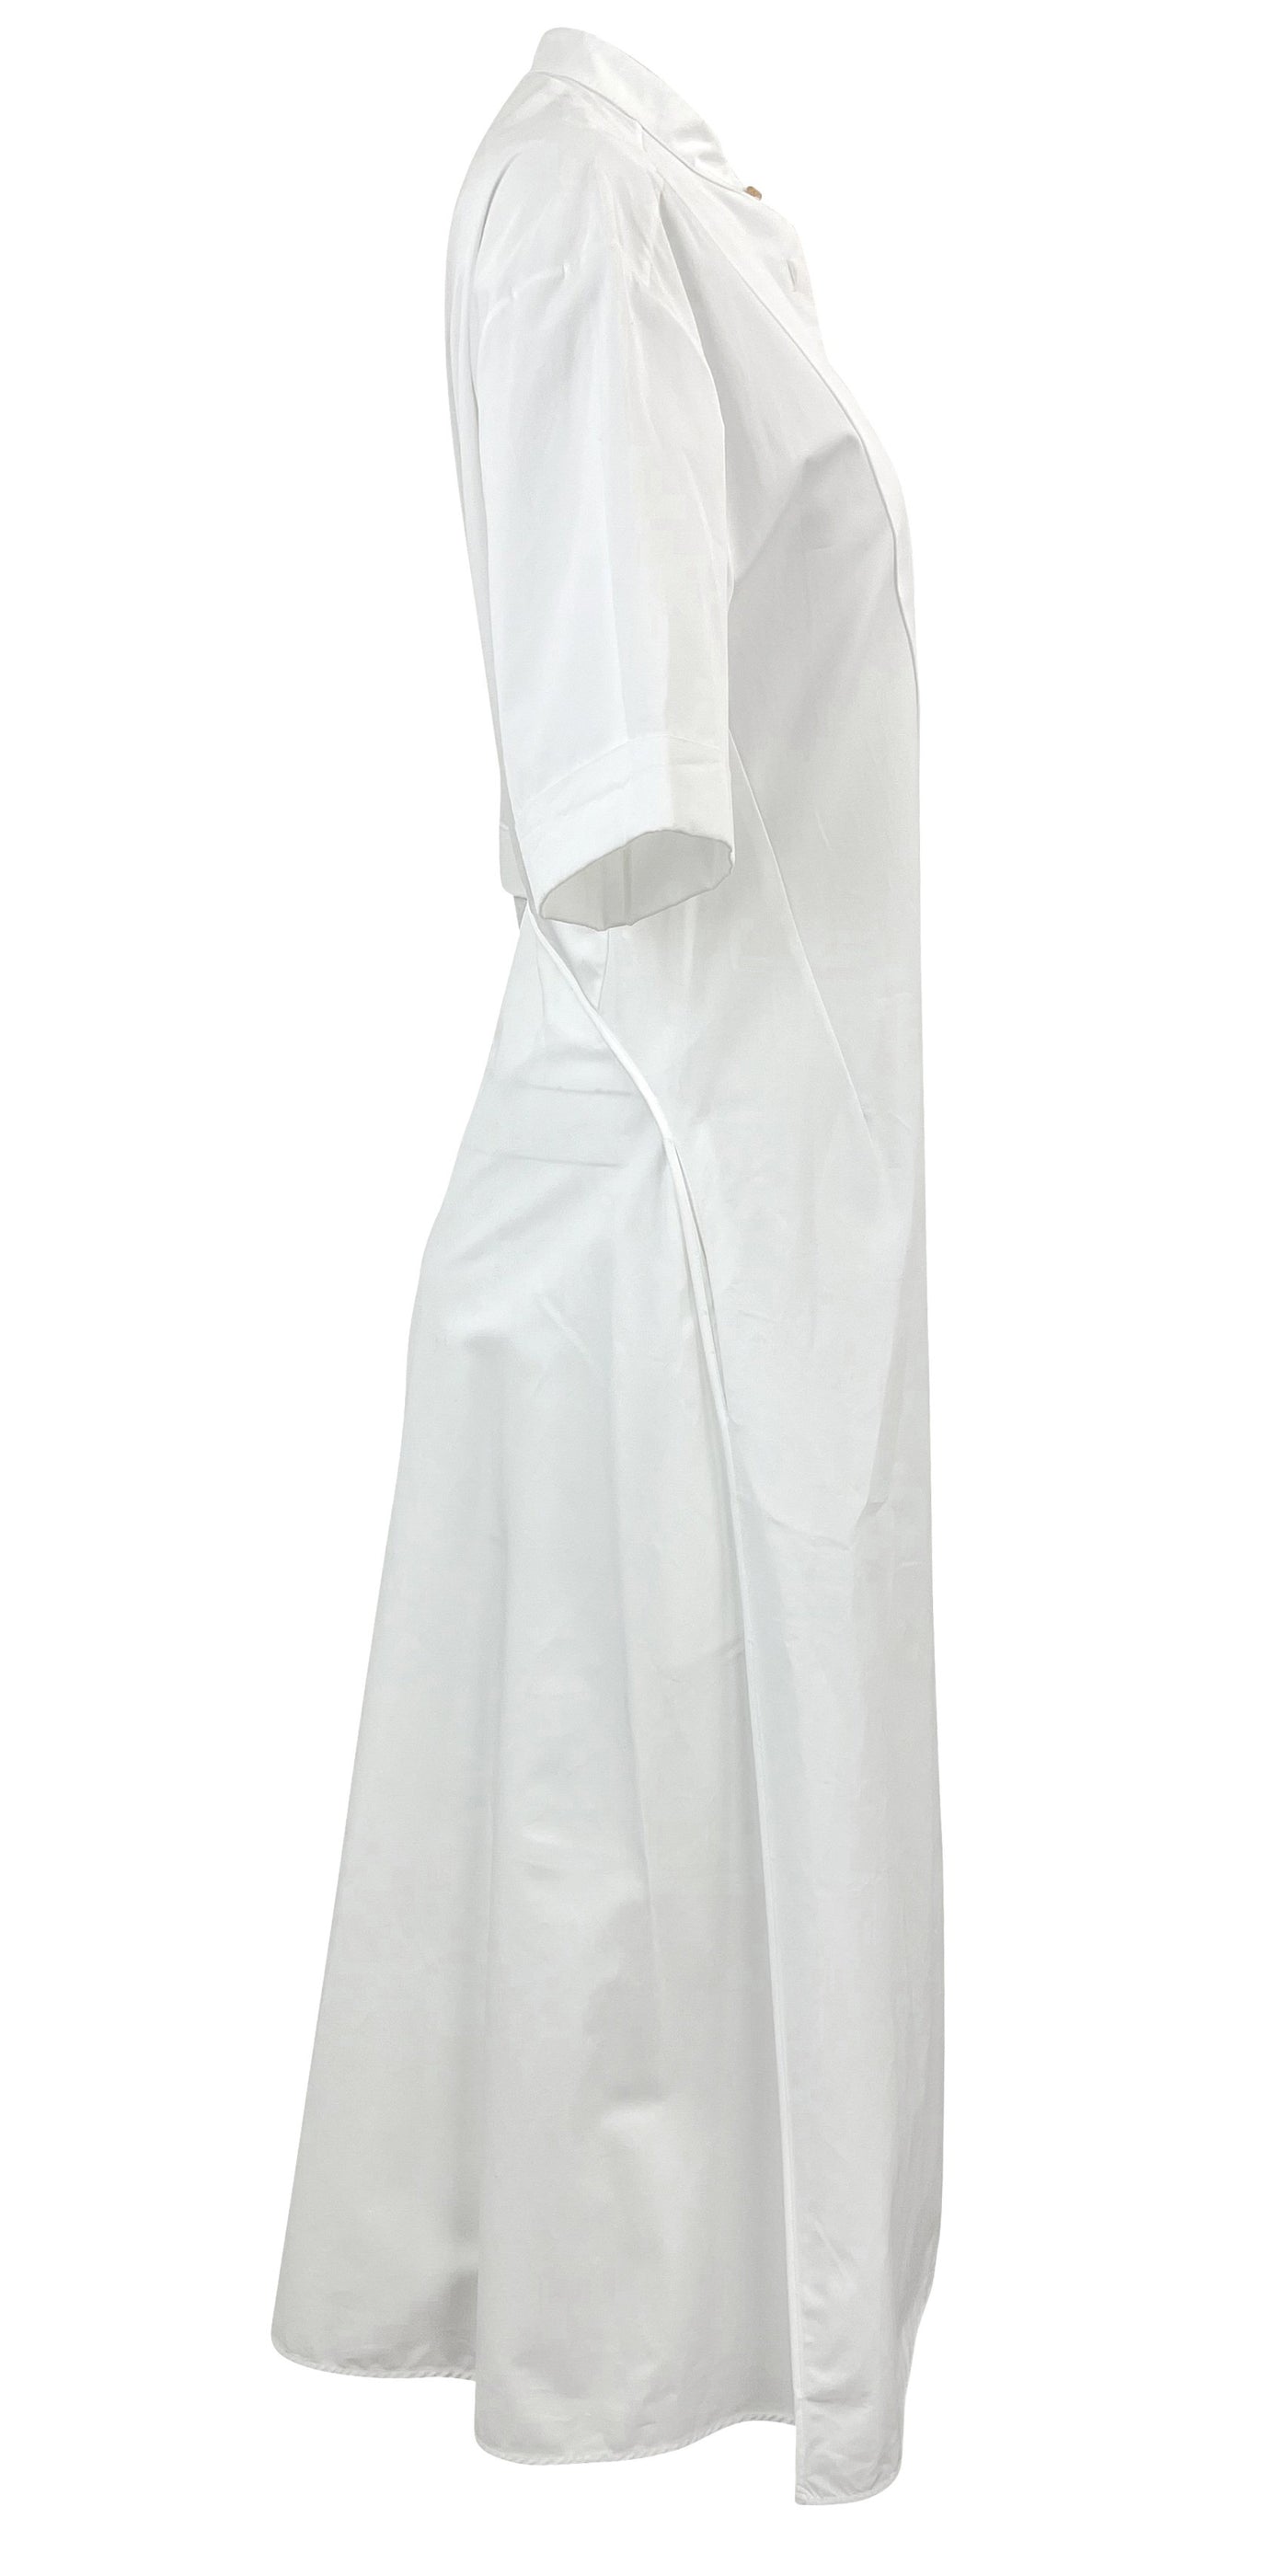 Jil Sander Cotton Shirt Dress in White - Discounts on Jil Sander at UAL